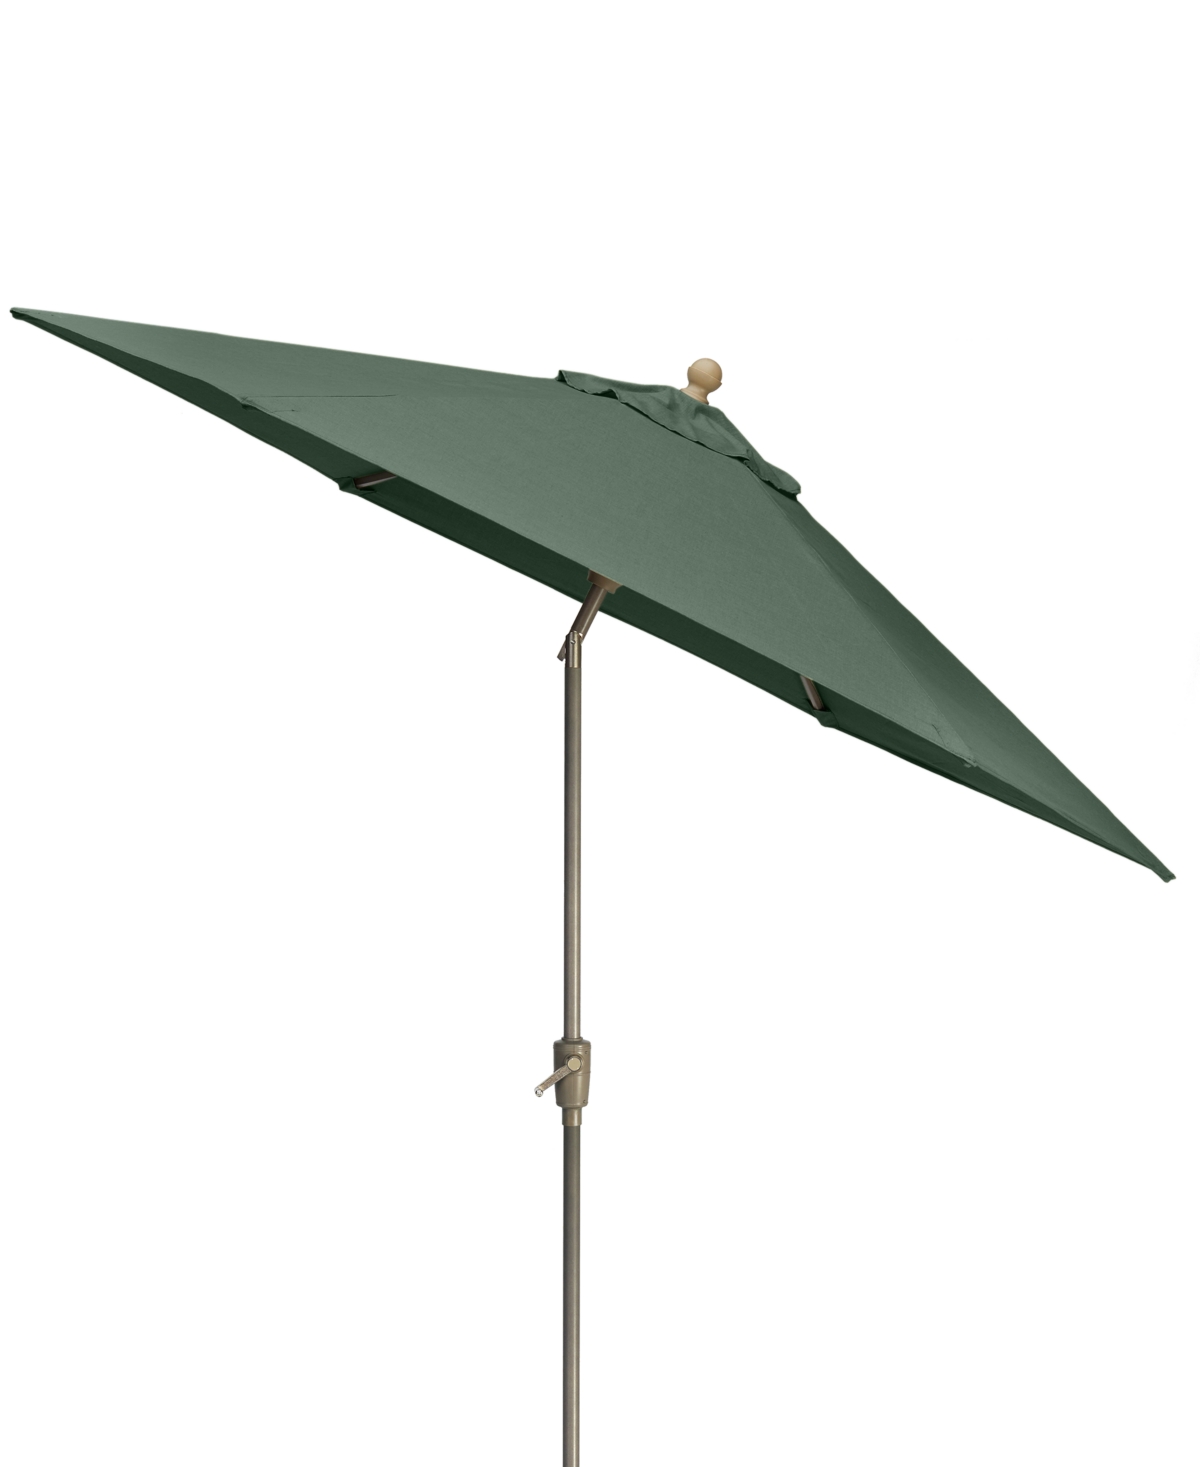 Agio Wayland Outdoor 9' Auto-tilt Umbrella, Created For Macy's In Outdura Grasshopper